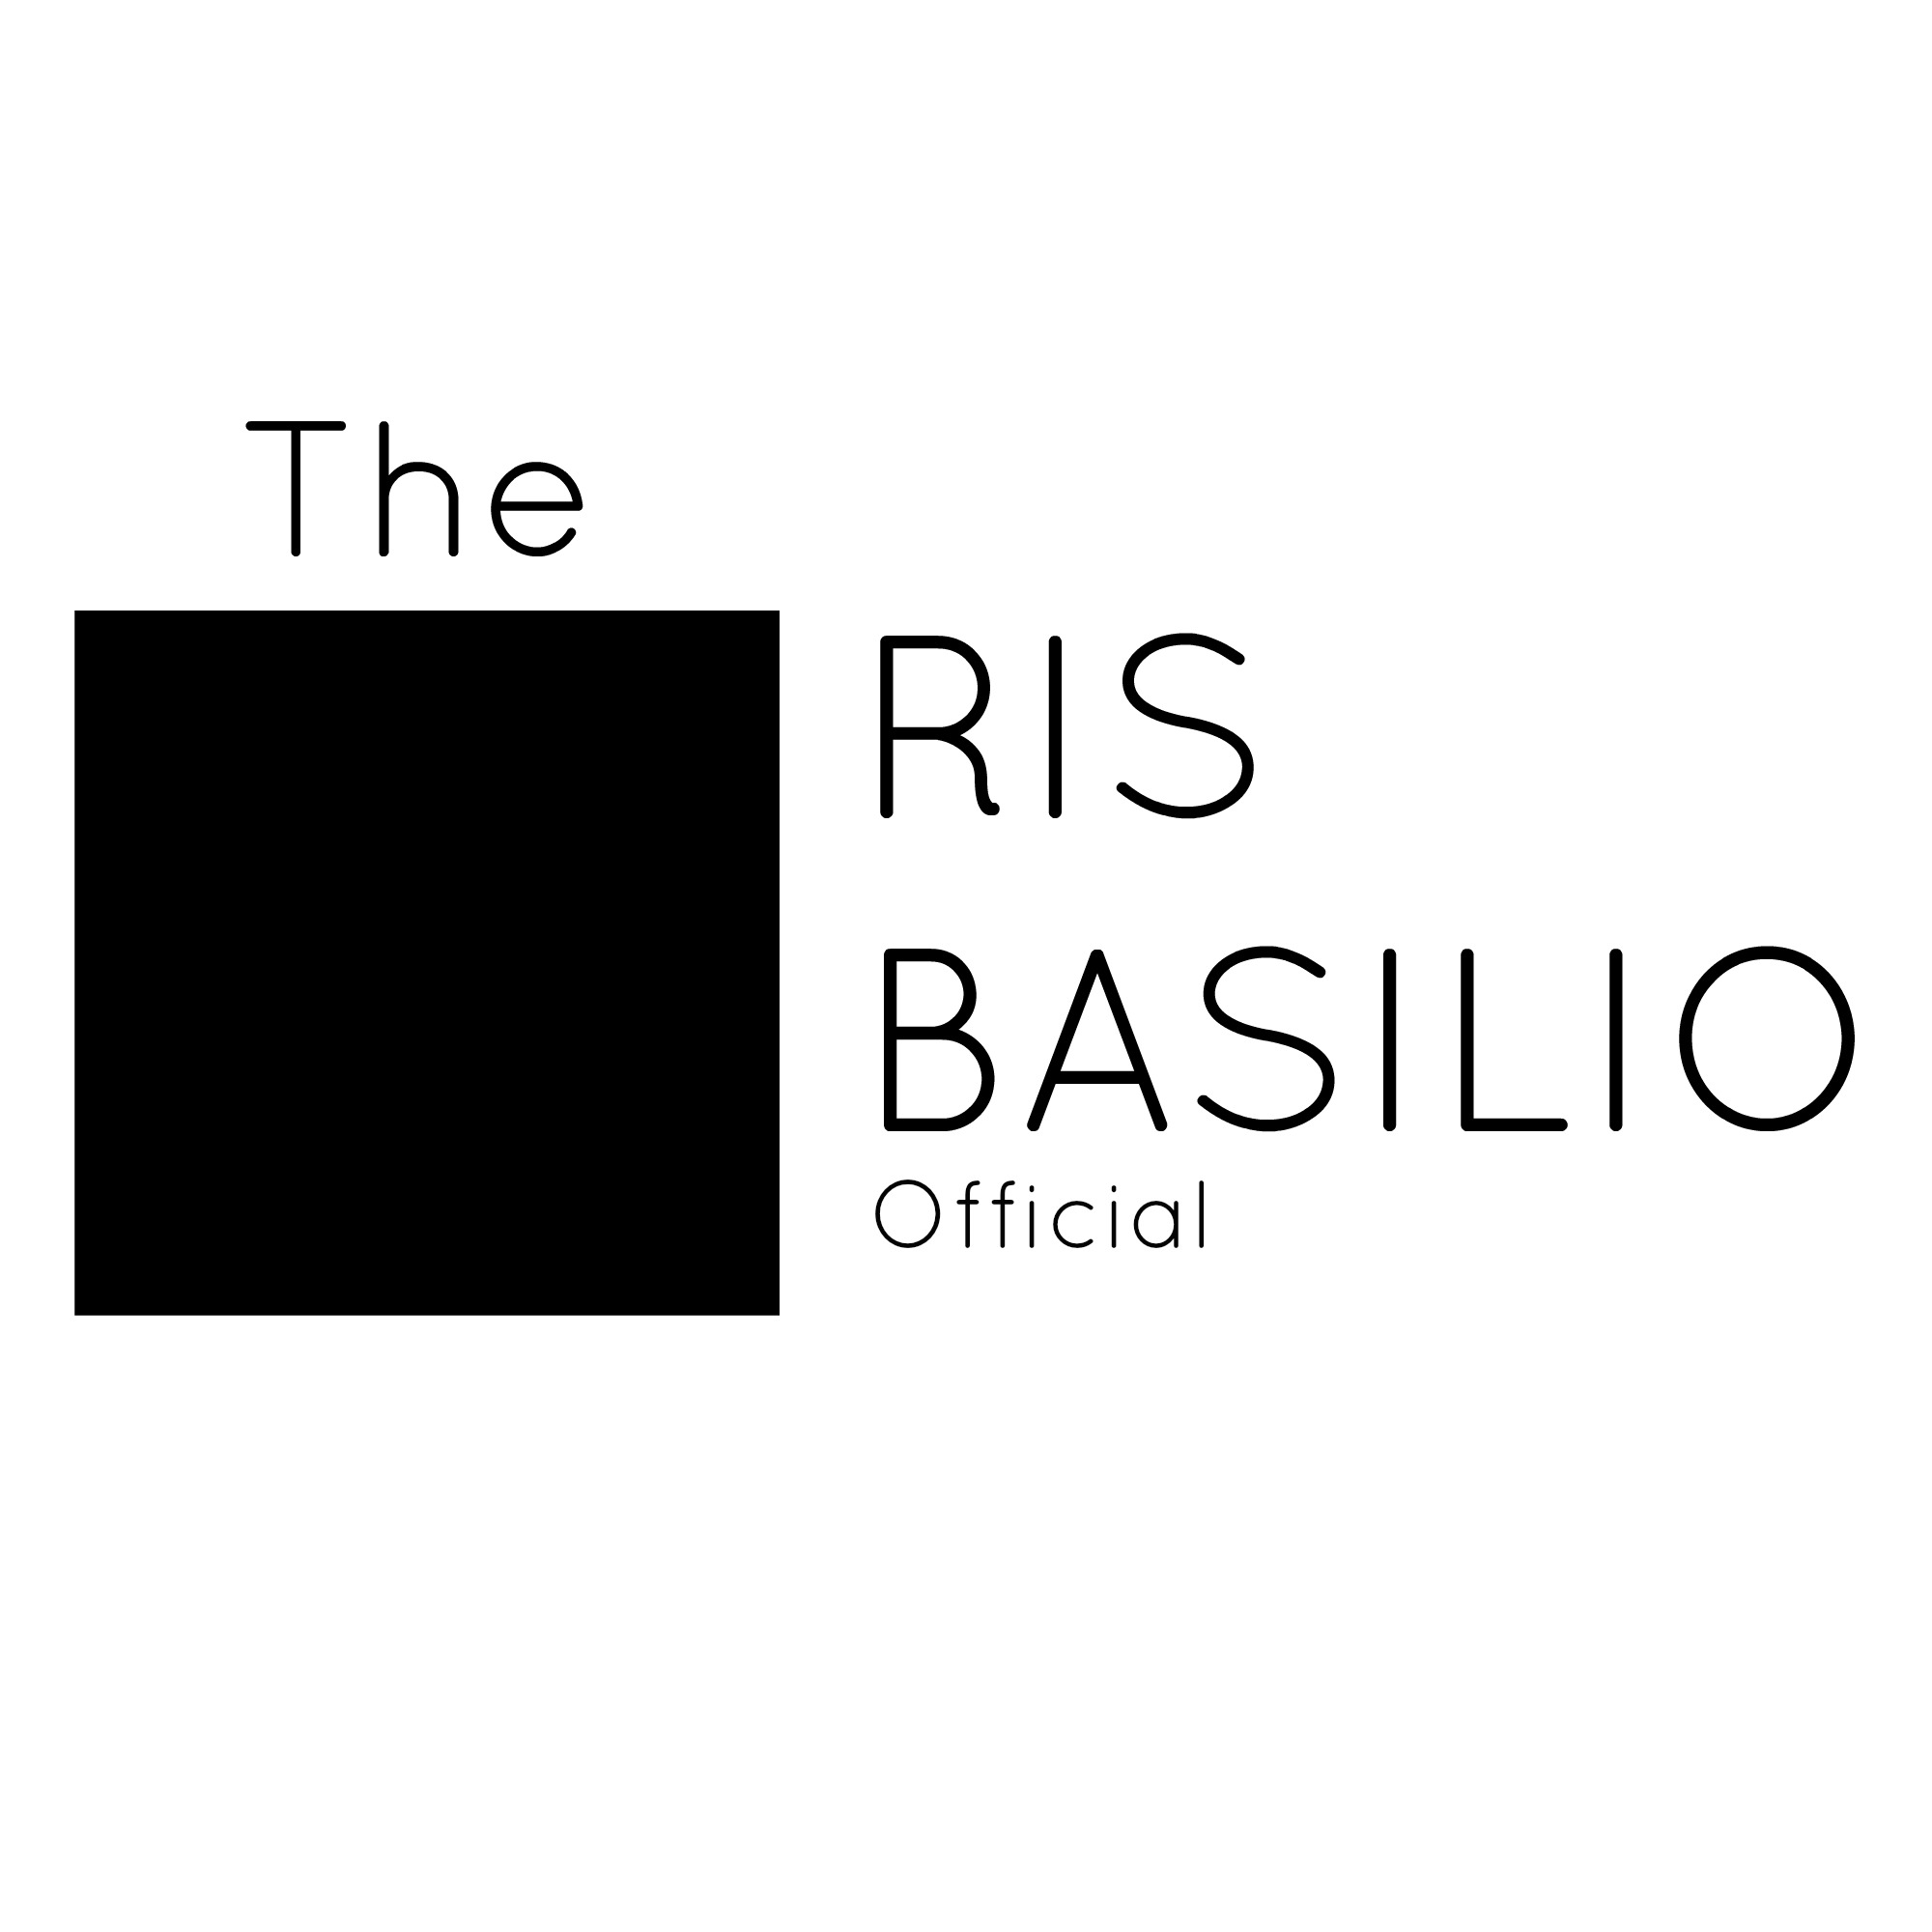 The Ris Basilio Official